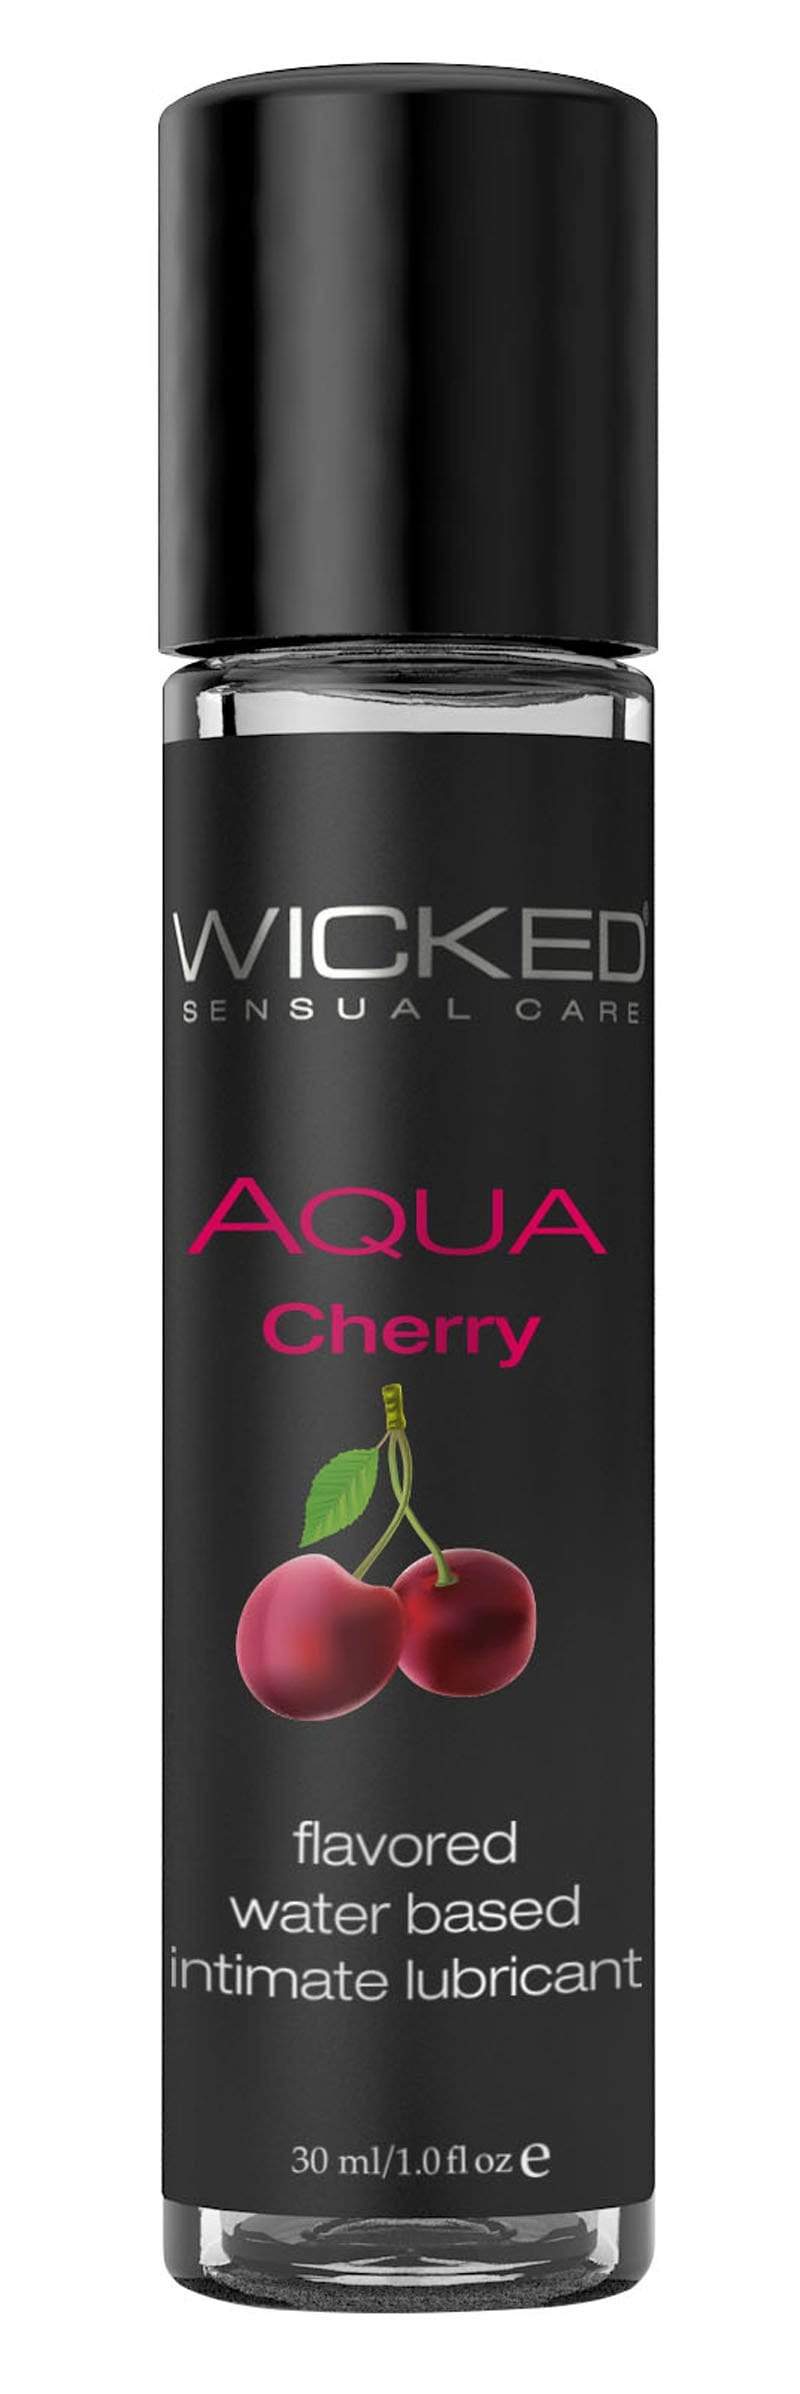 aqua cherry water based lubricant 1 oz